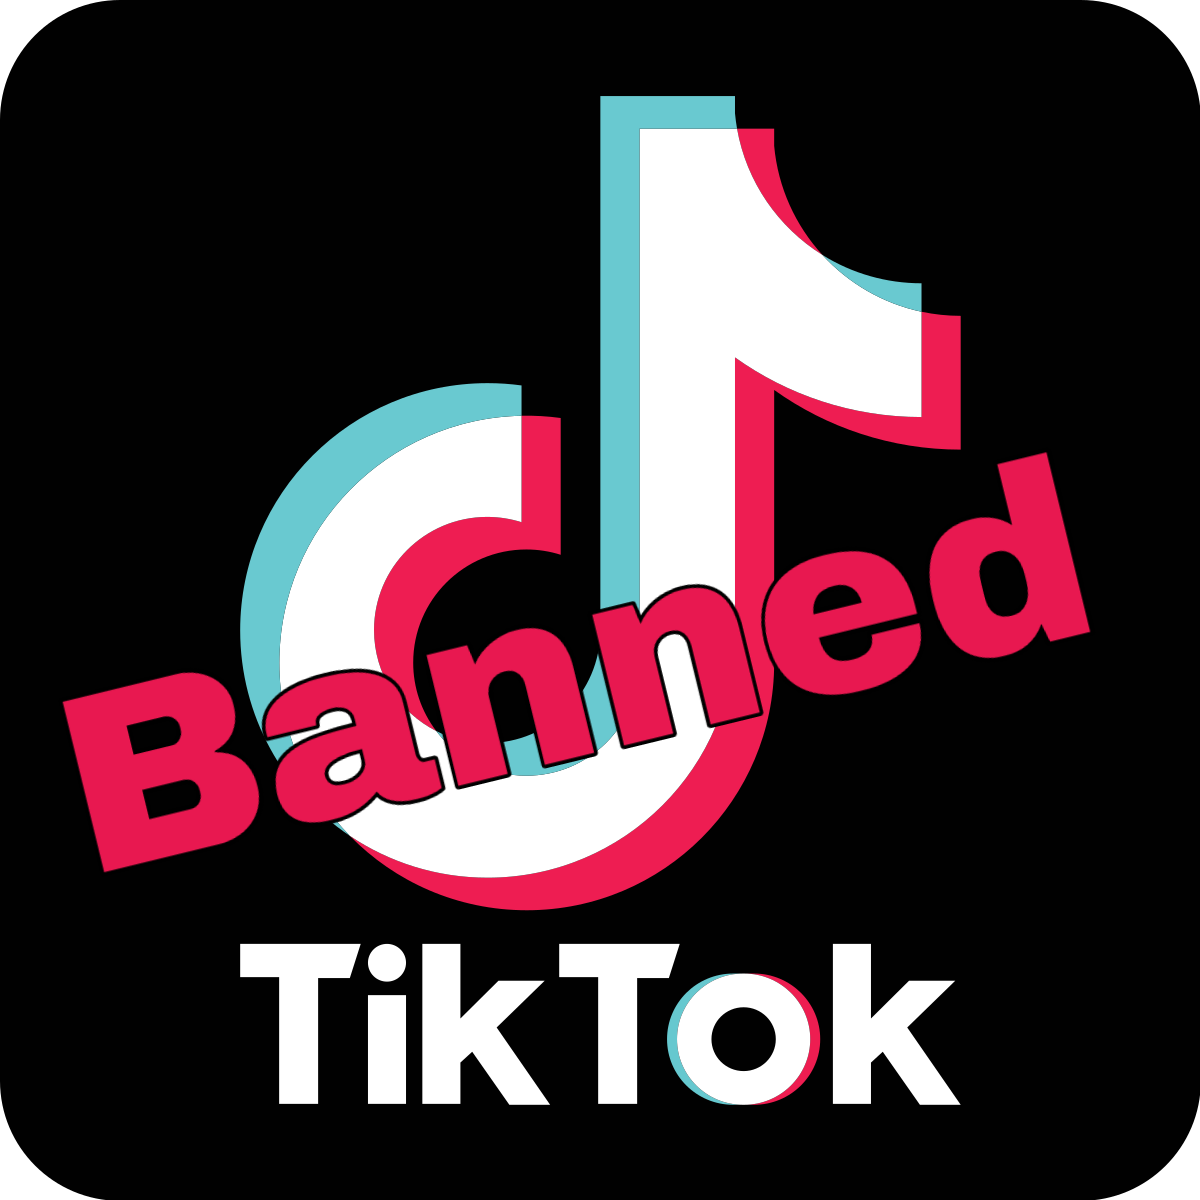 tik tok banned in india